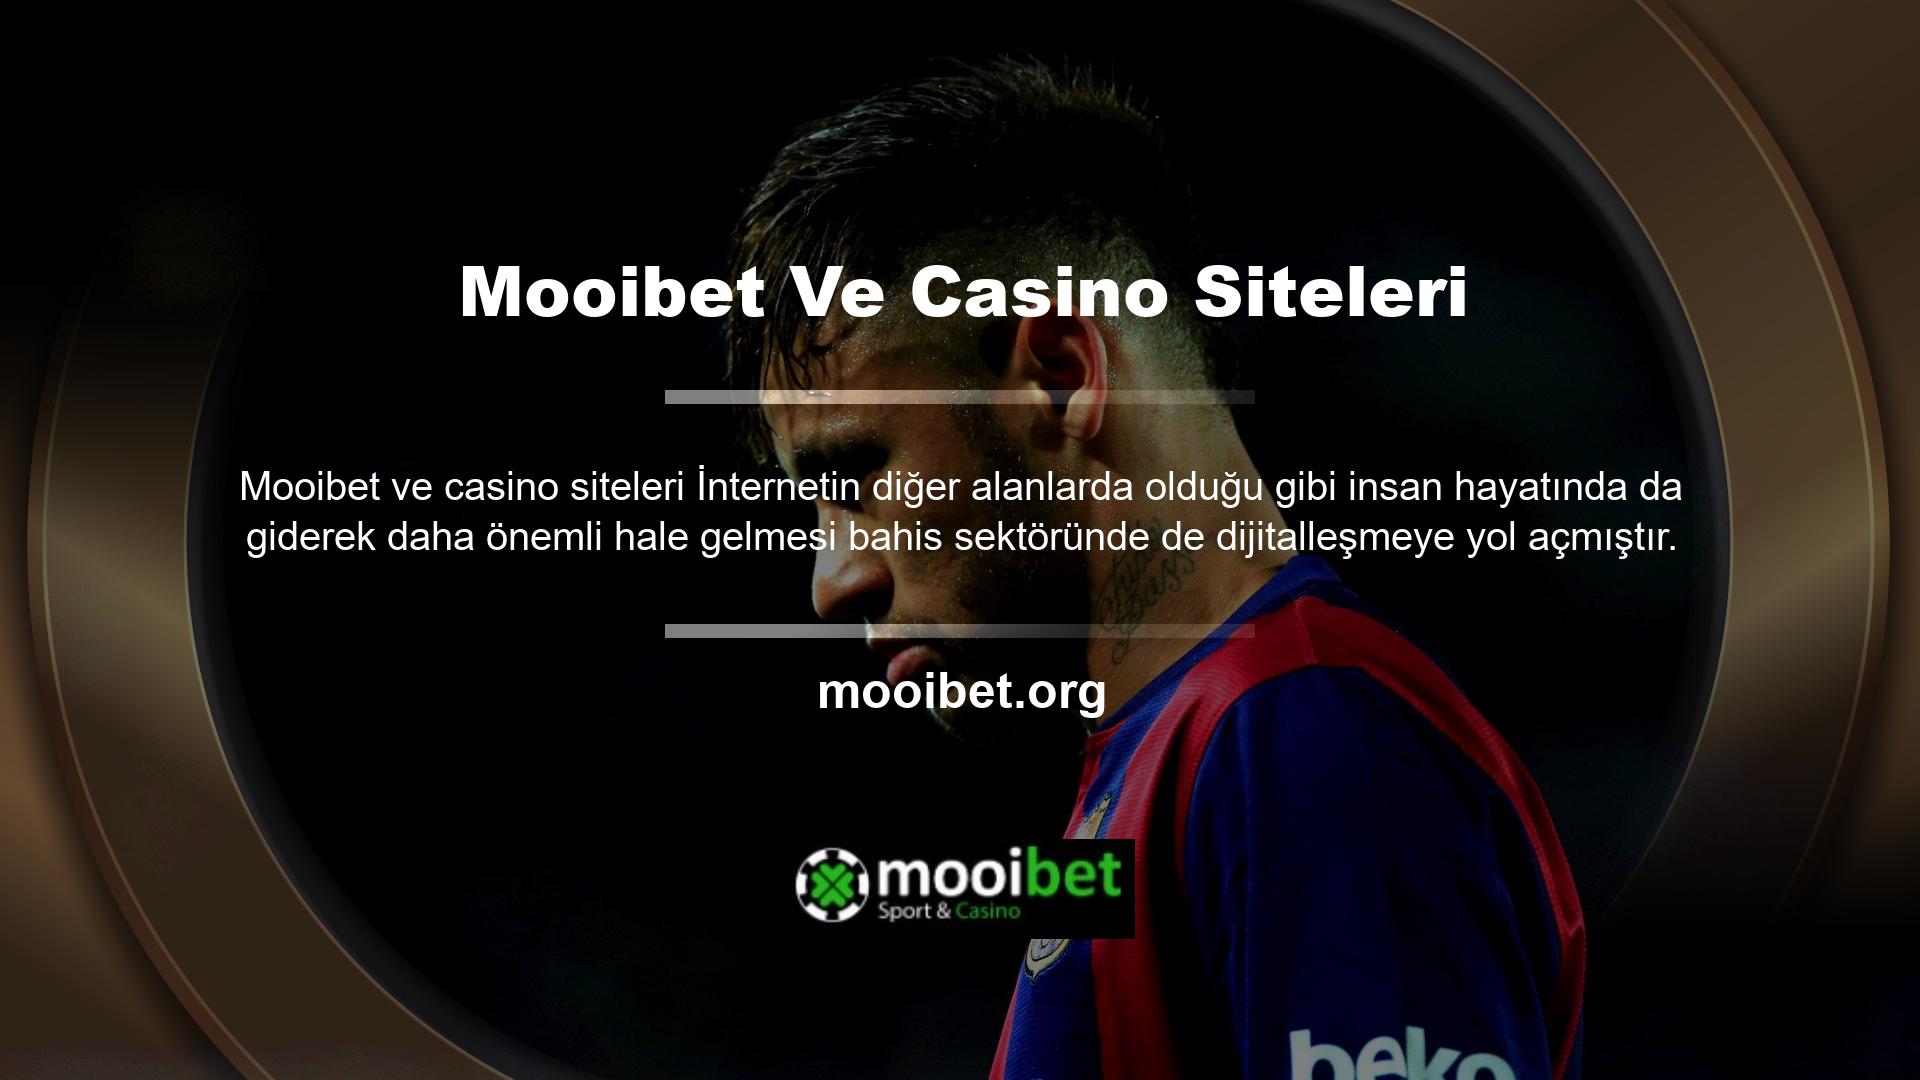 Mooibet Ve Casino Siteleri